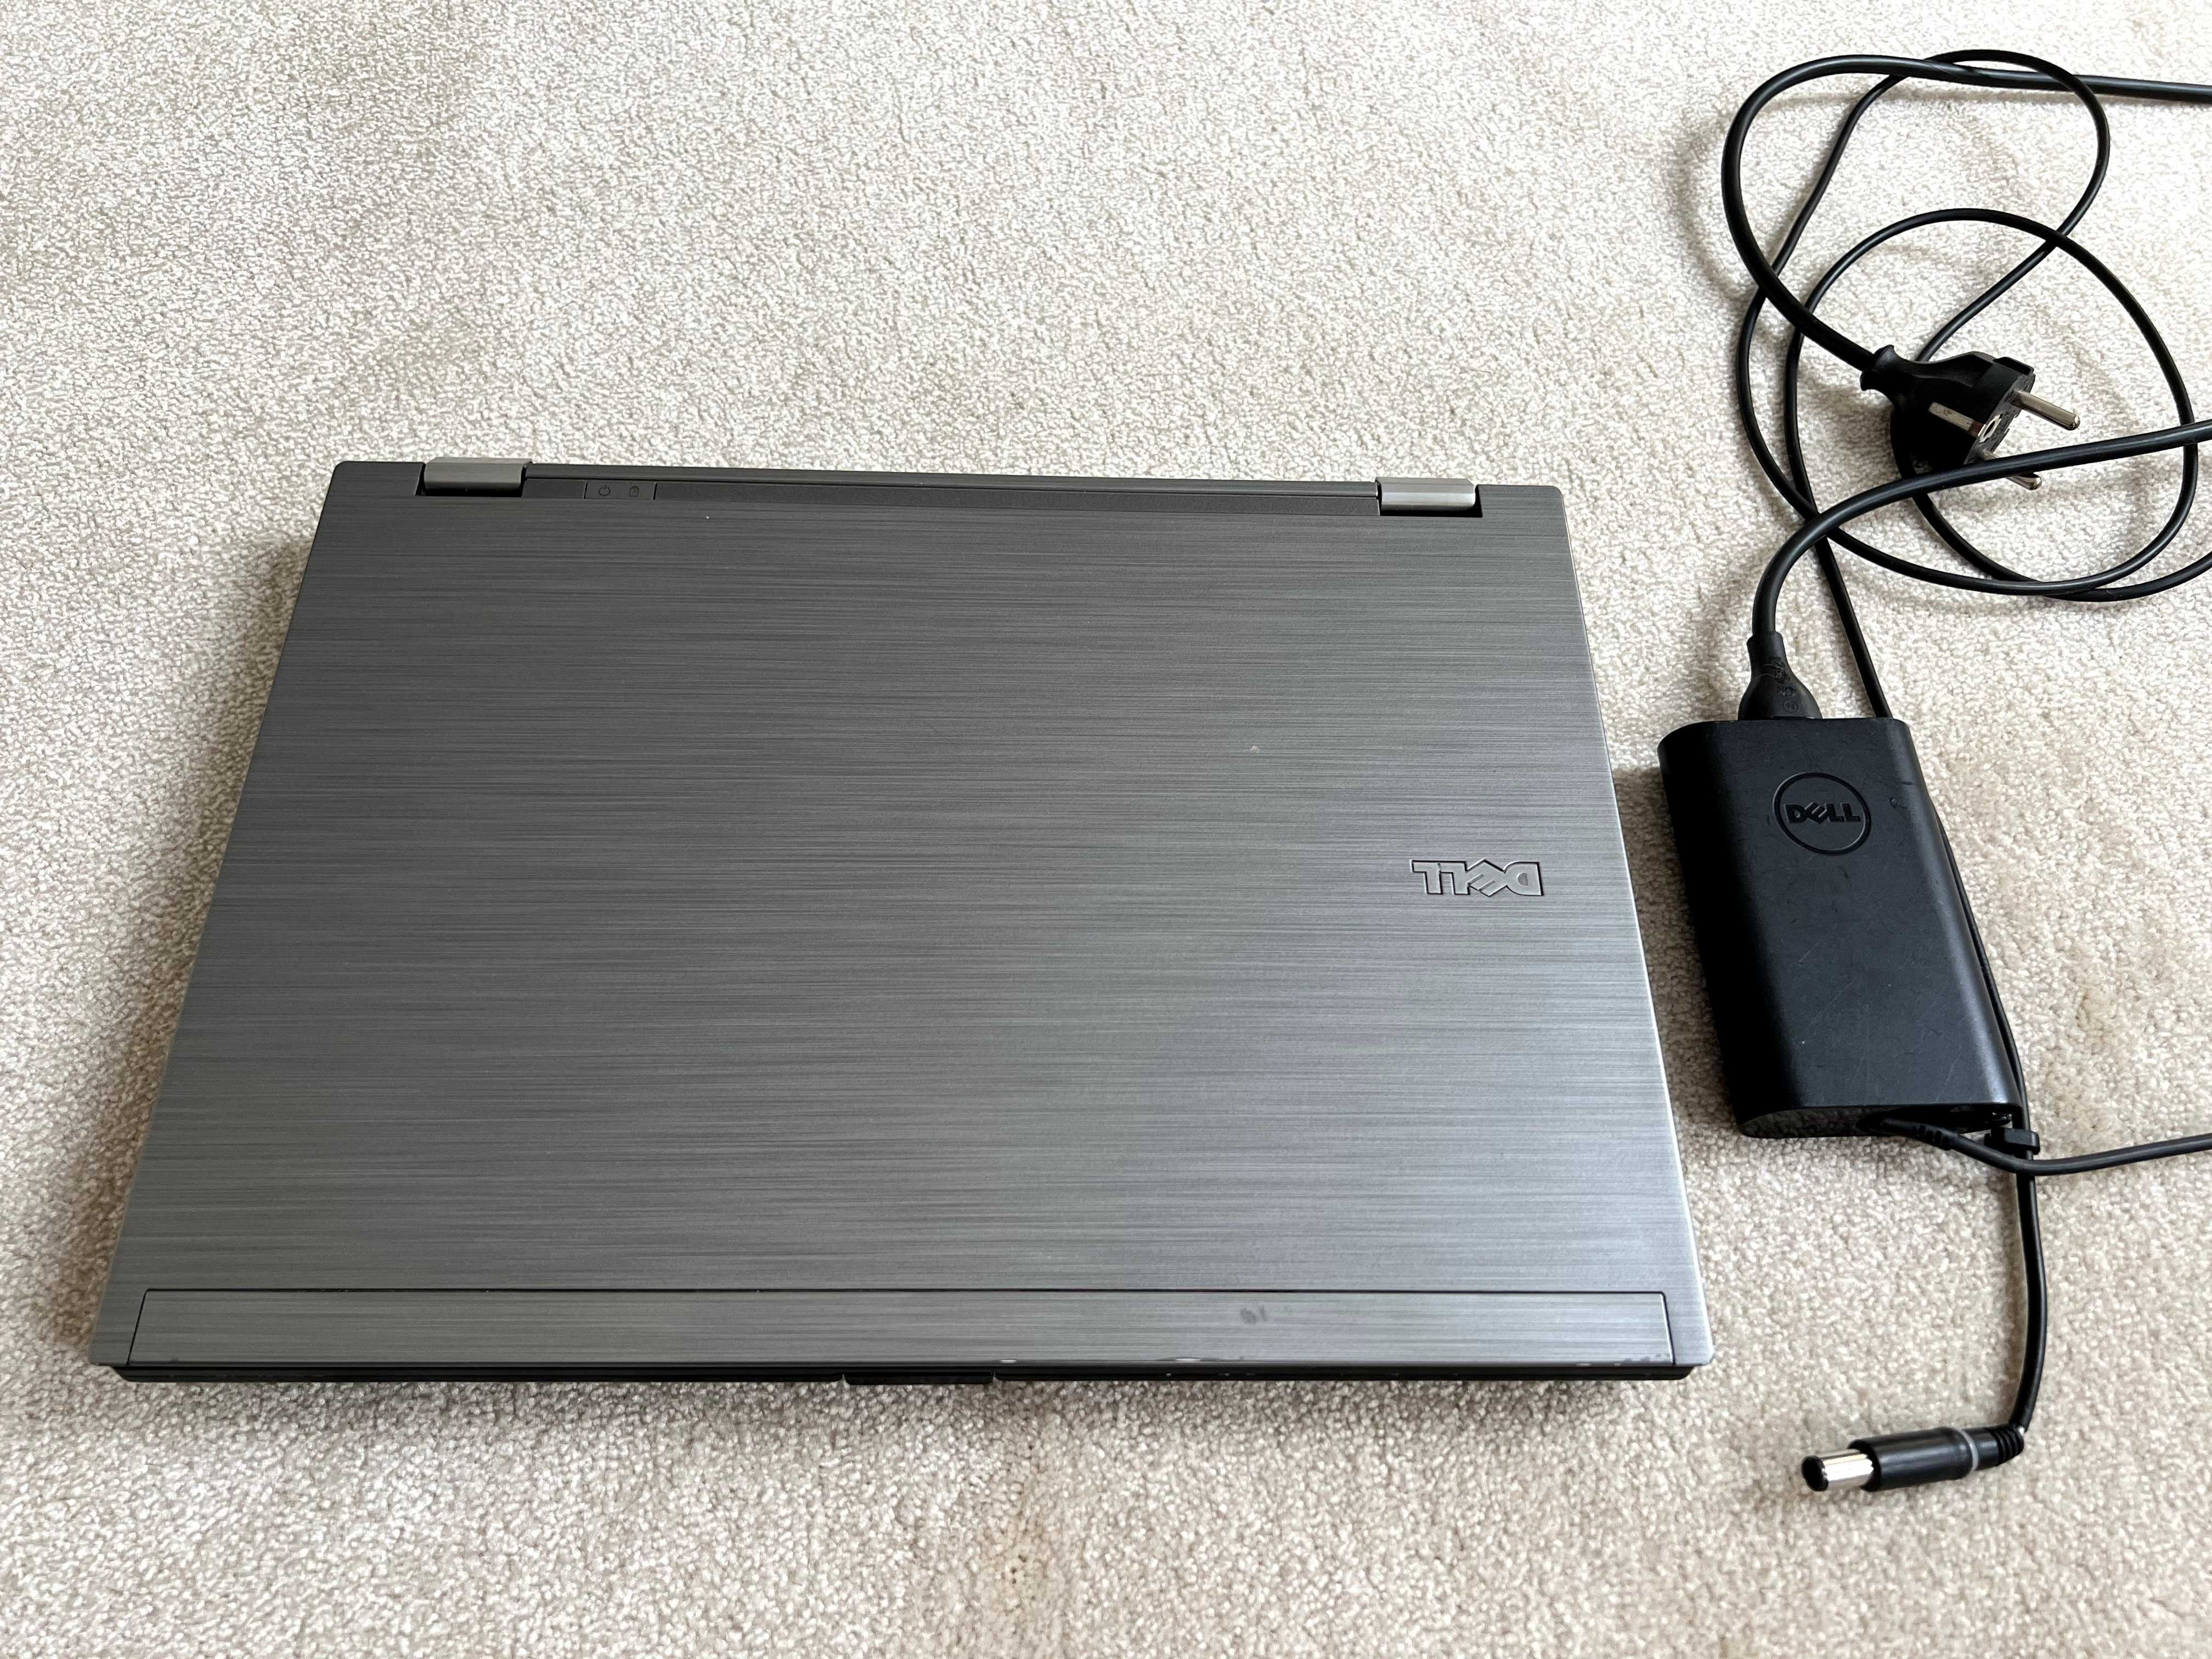 Laptop Dell E6410 i5, 6GB, 128 GB SSD - klawiatura z cyrylicą